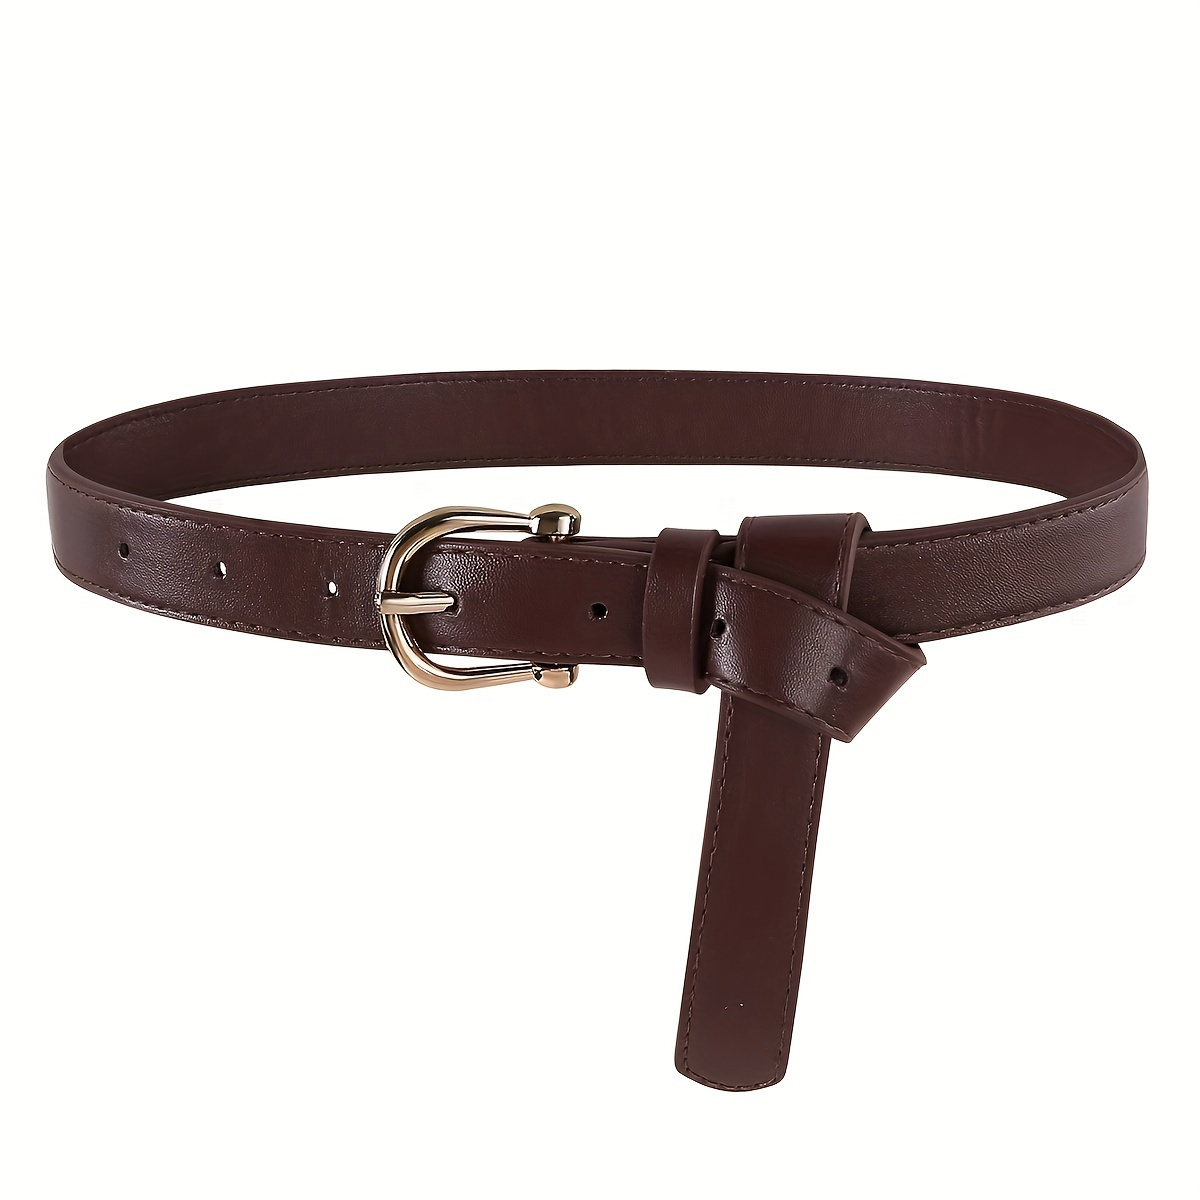 Buy Kamar ka belt for ladies Kamar belt for ladies slim belt for